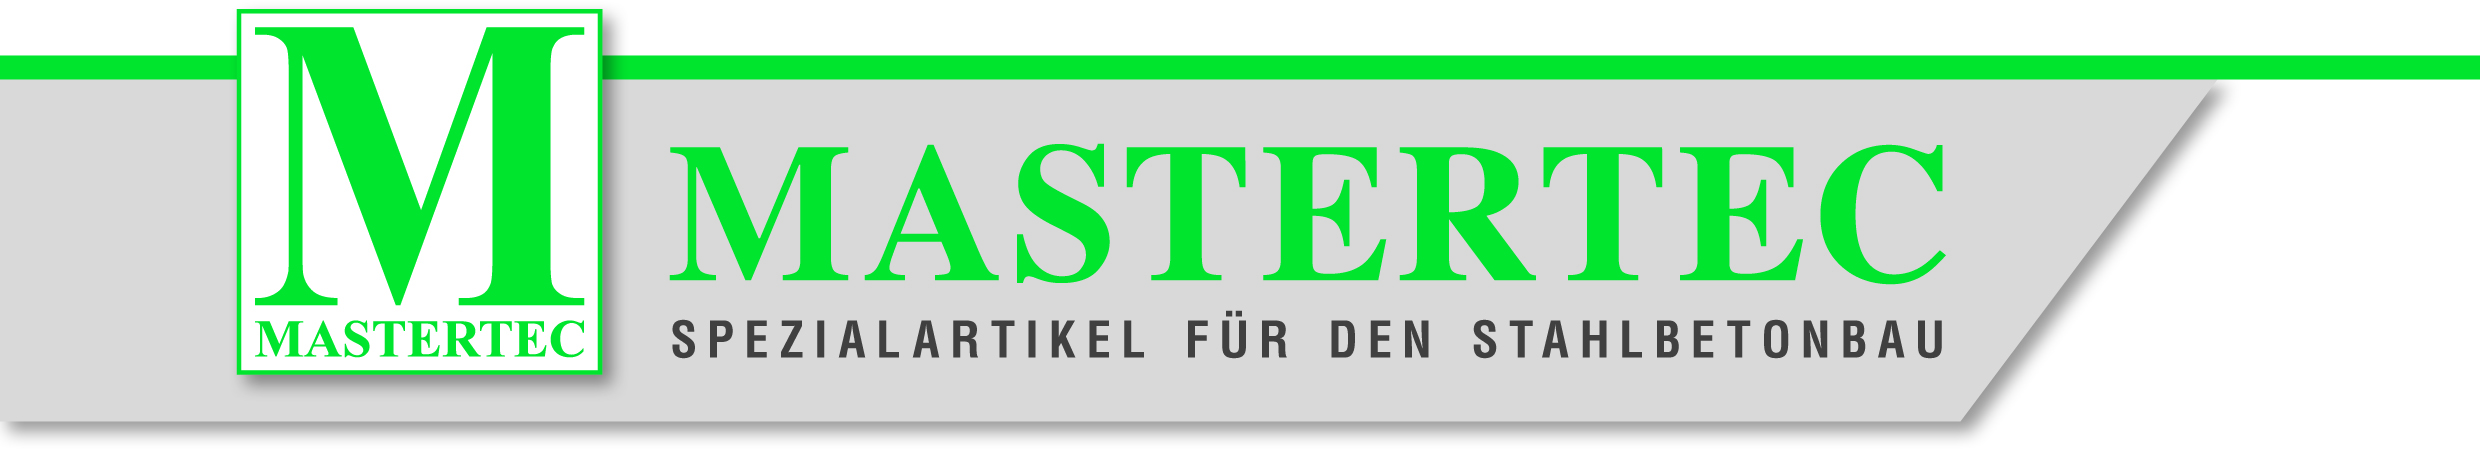 Mastertec GmbH & Co. KG